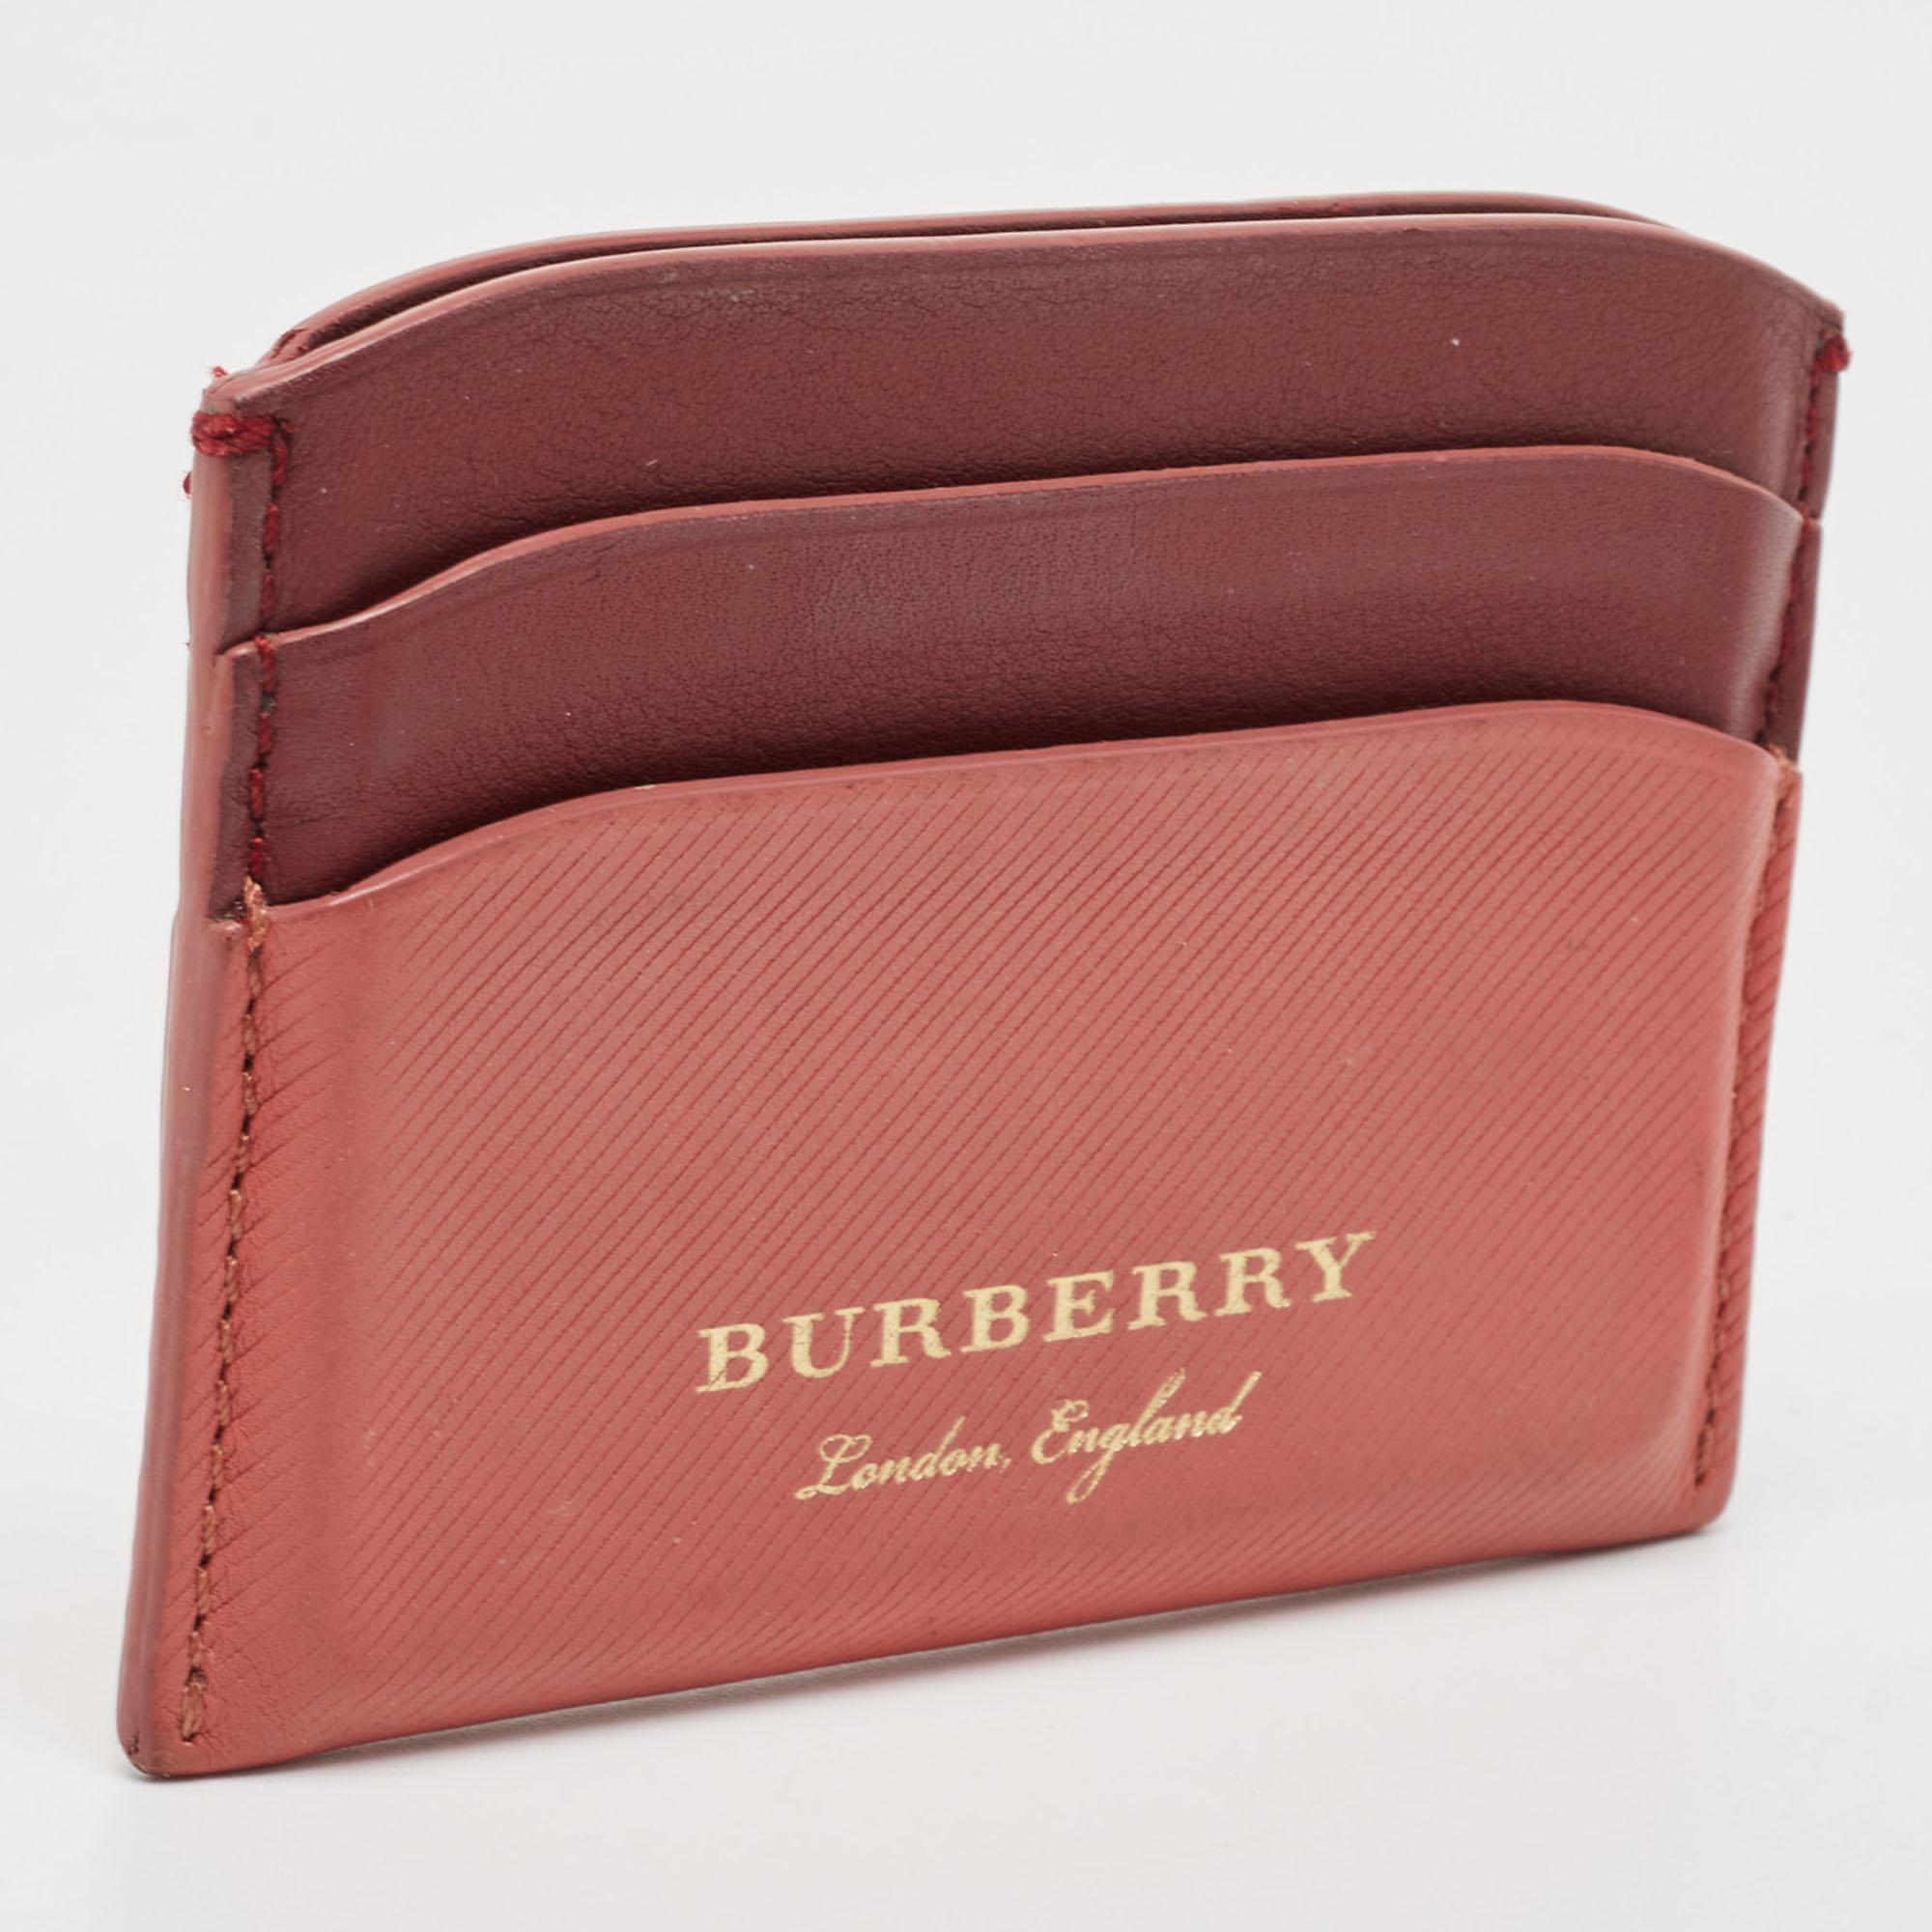 Burberry Burgundy/Light Red Leather Card Holder